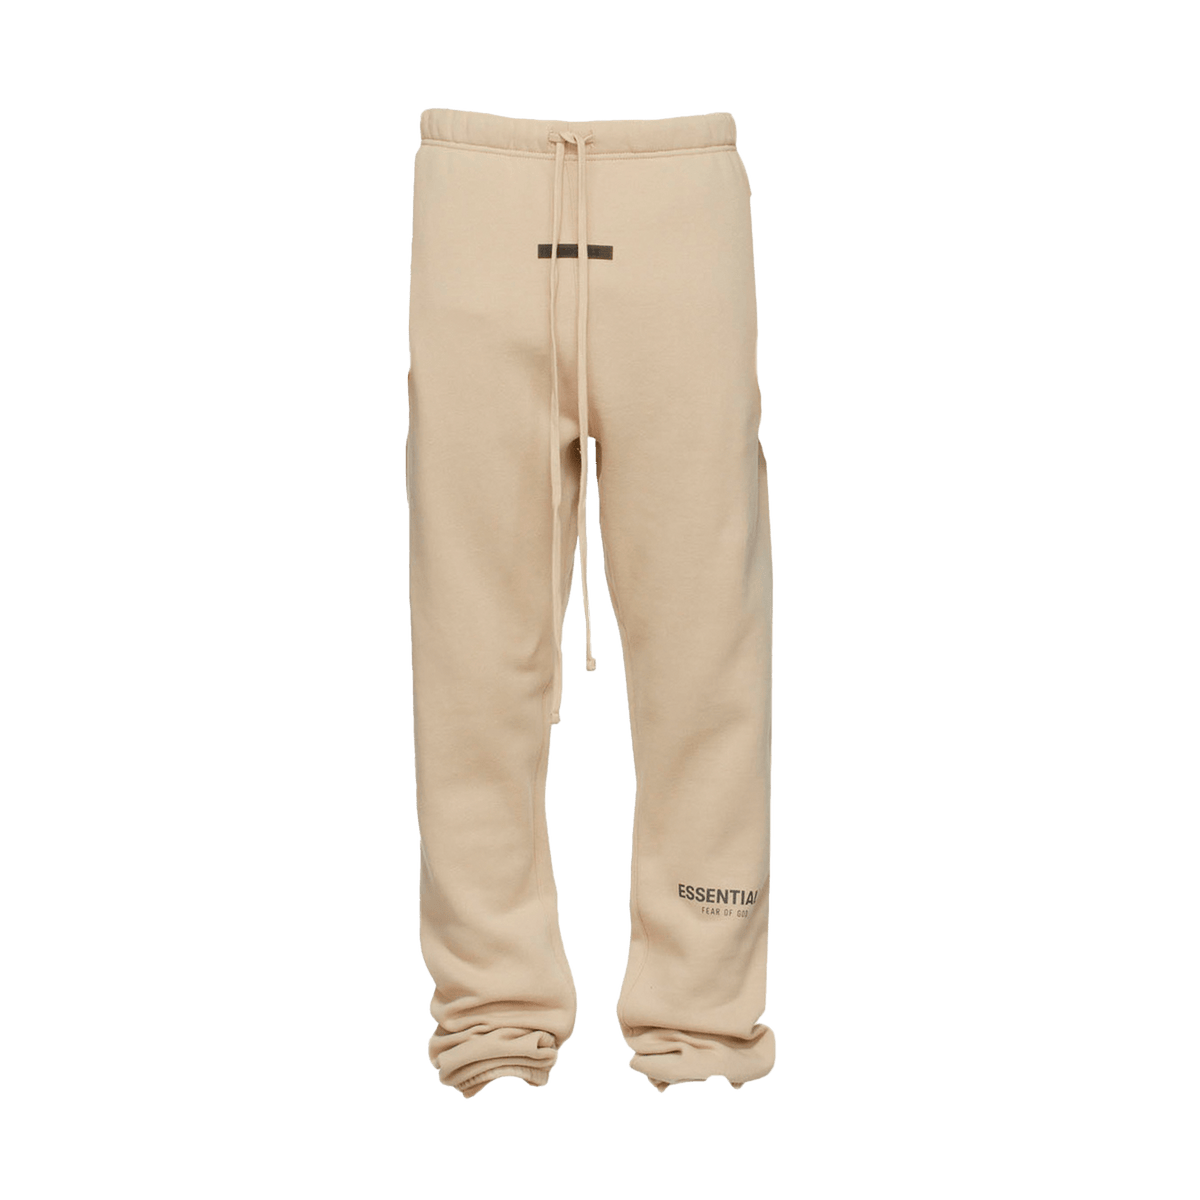 Contrast High Waist Cotton Denim Shorts Essentials SSENSE Exclusive Fleece Lounge Pants - UrlfreezeShops